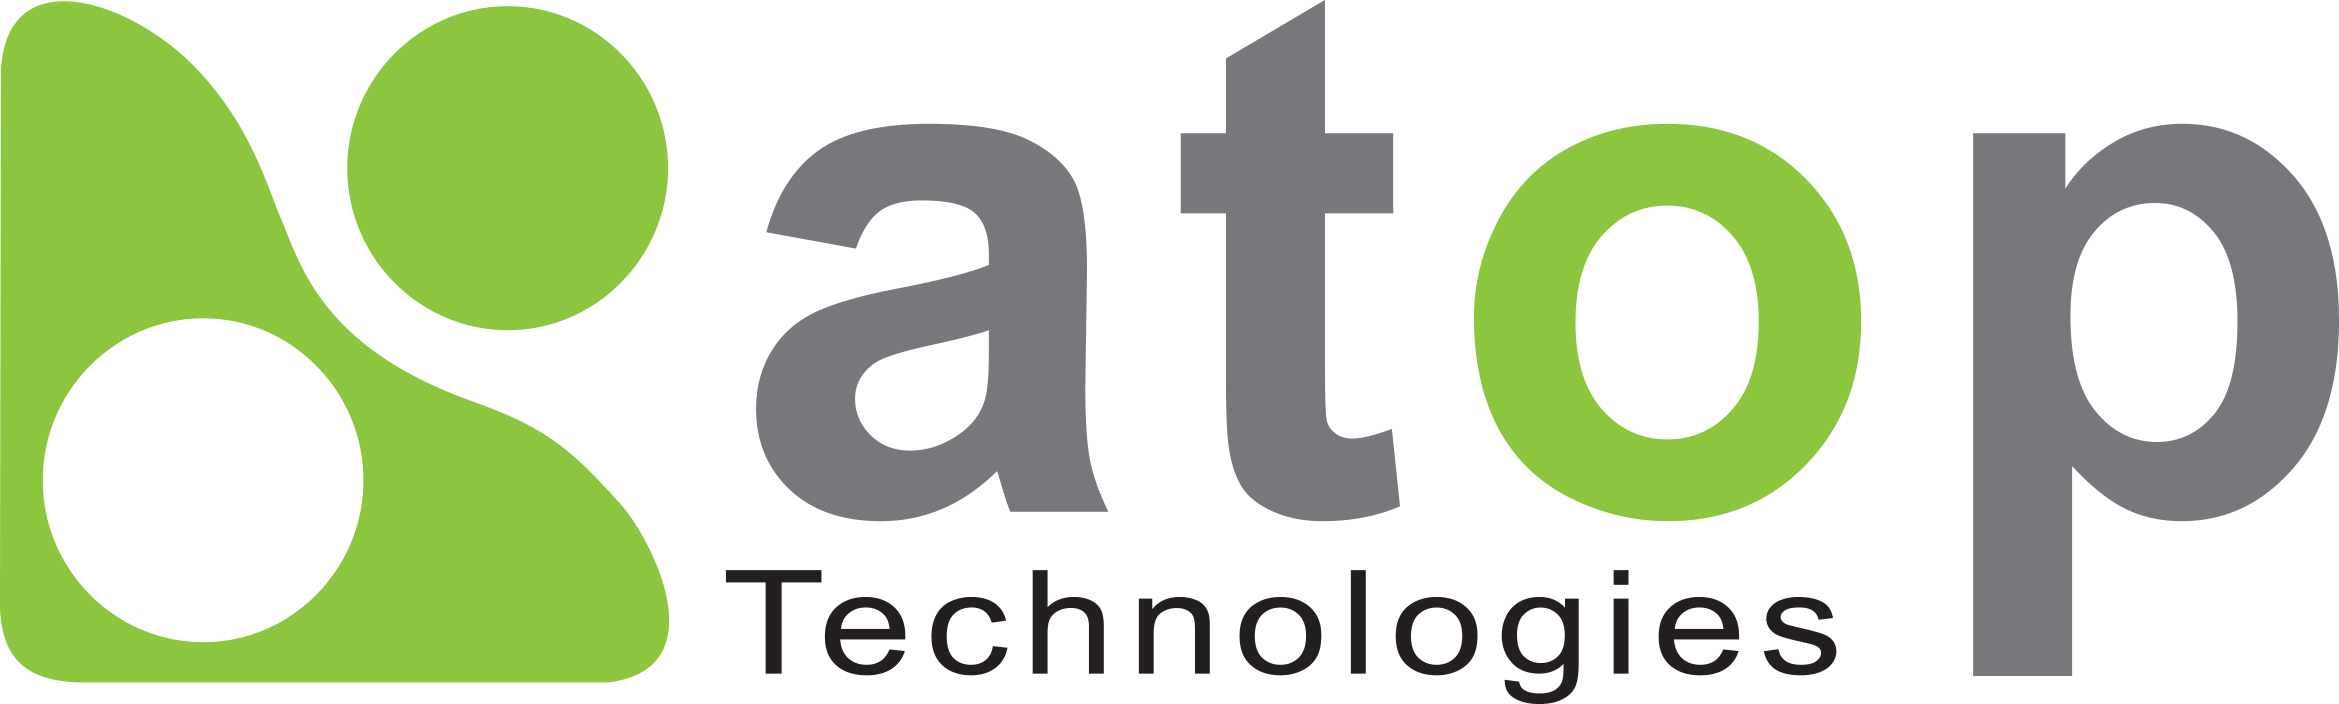 Atop Technologies